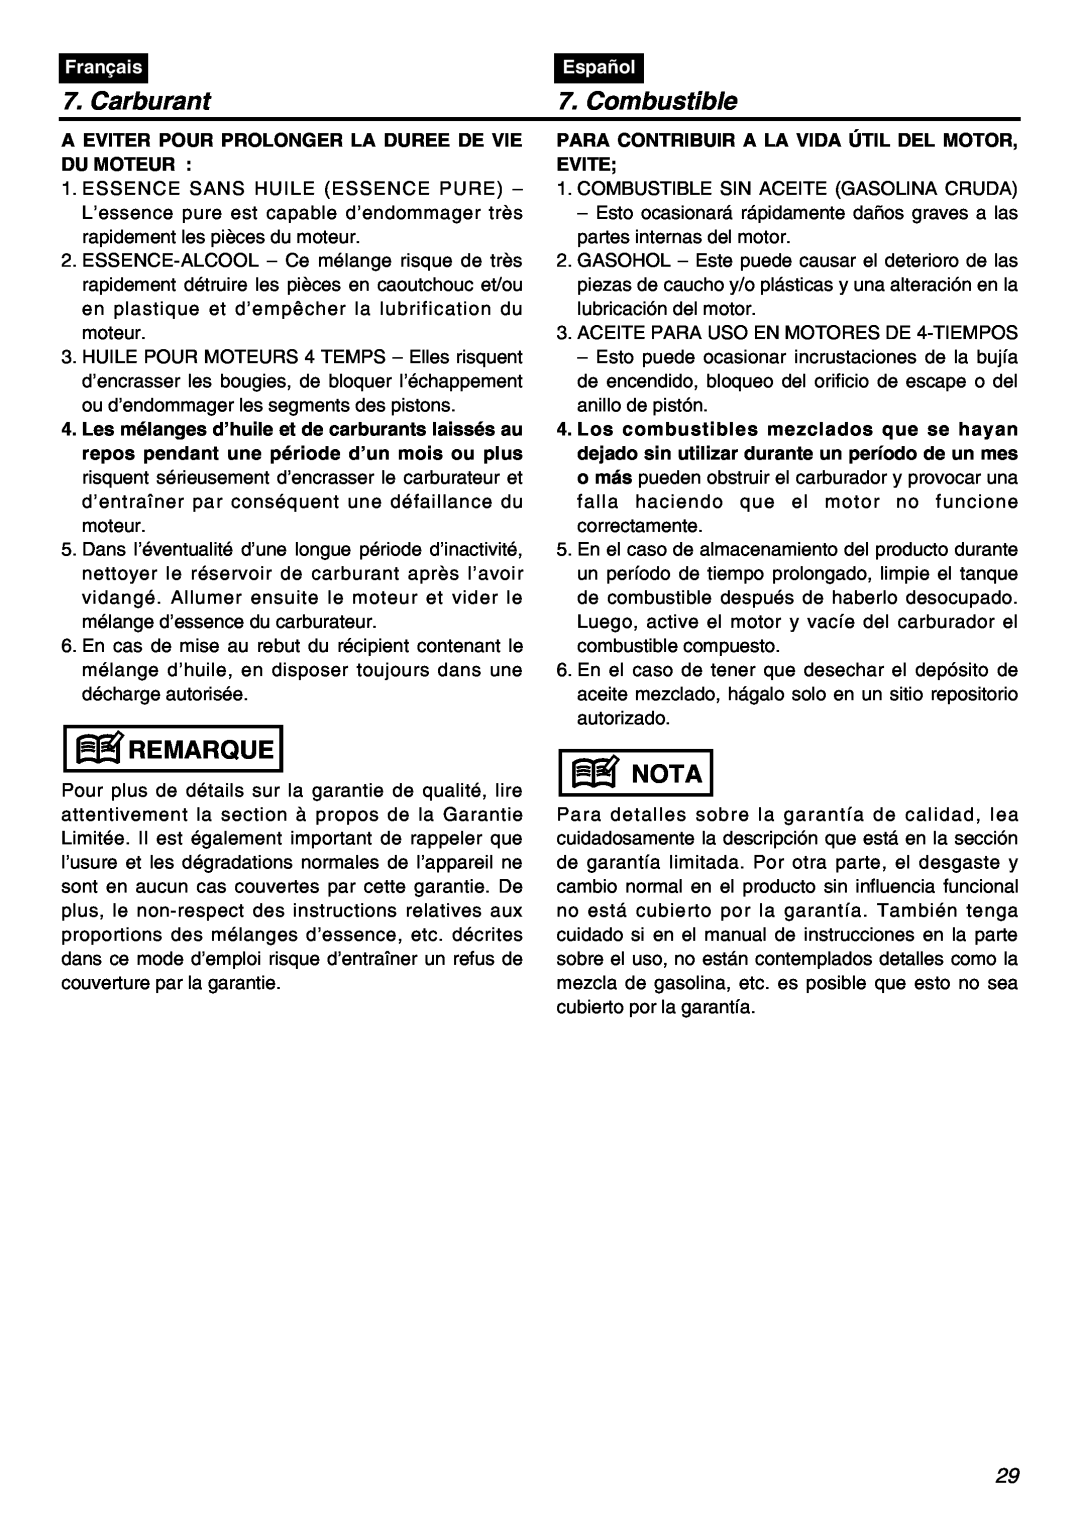 Zenoah EBZ8001-CA, EBZ8001RH-CA manual Carburant, Combustible, Remarque, Nota, Français, Español 